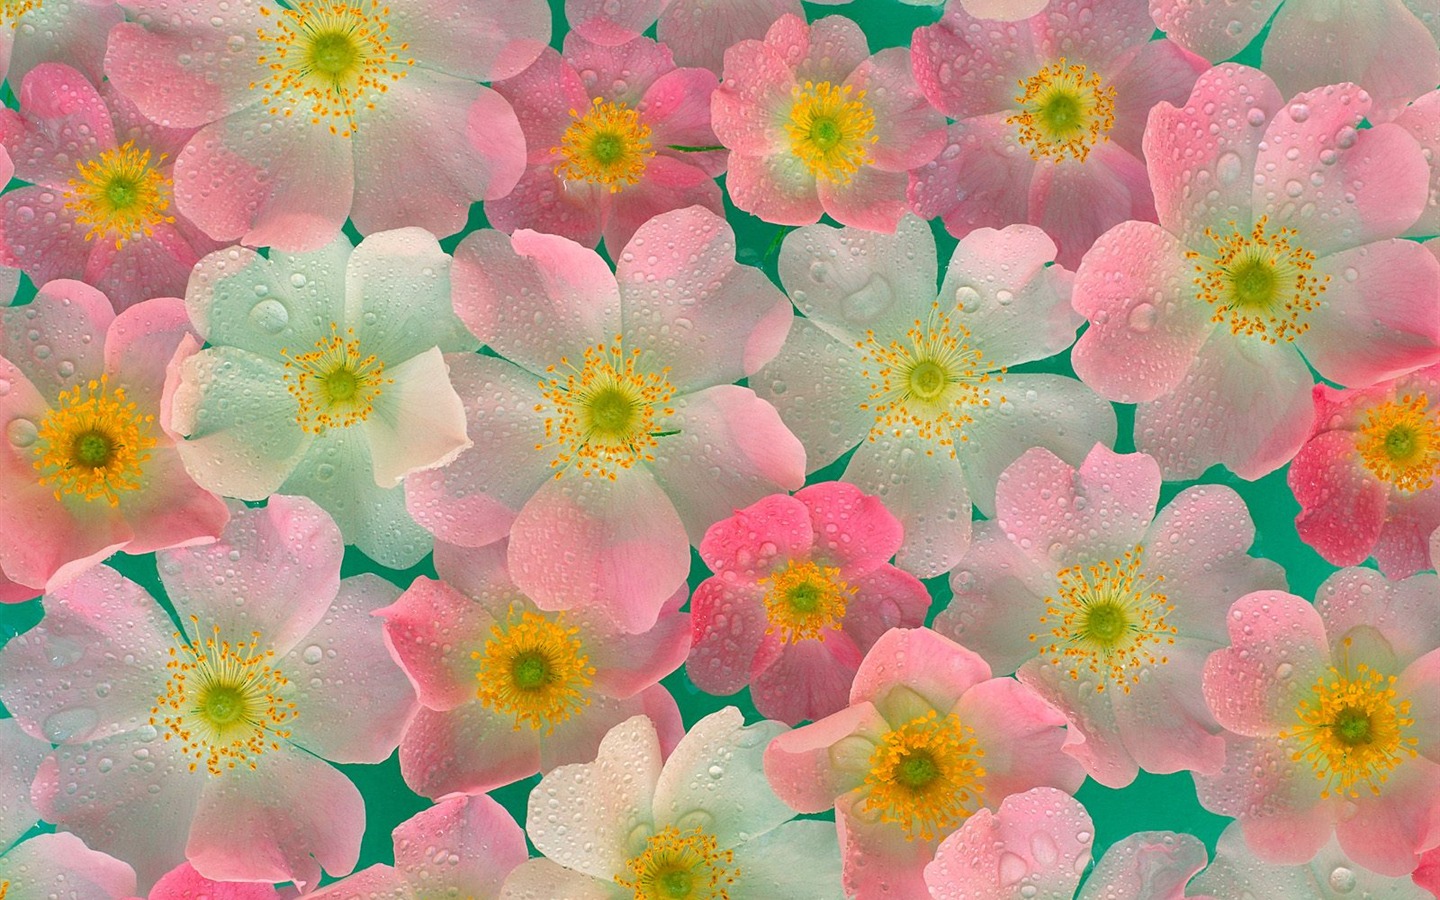 Flowers close-up (19) #9 - 1440x900